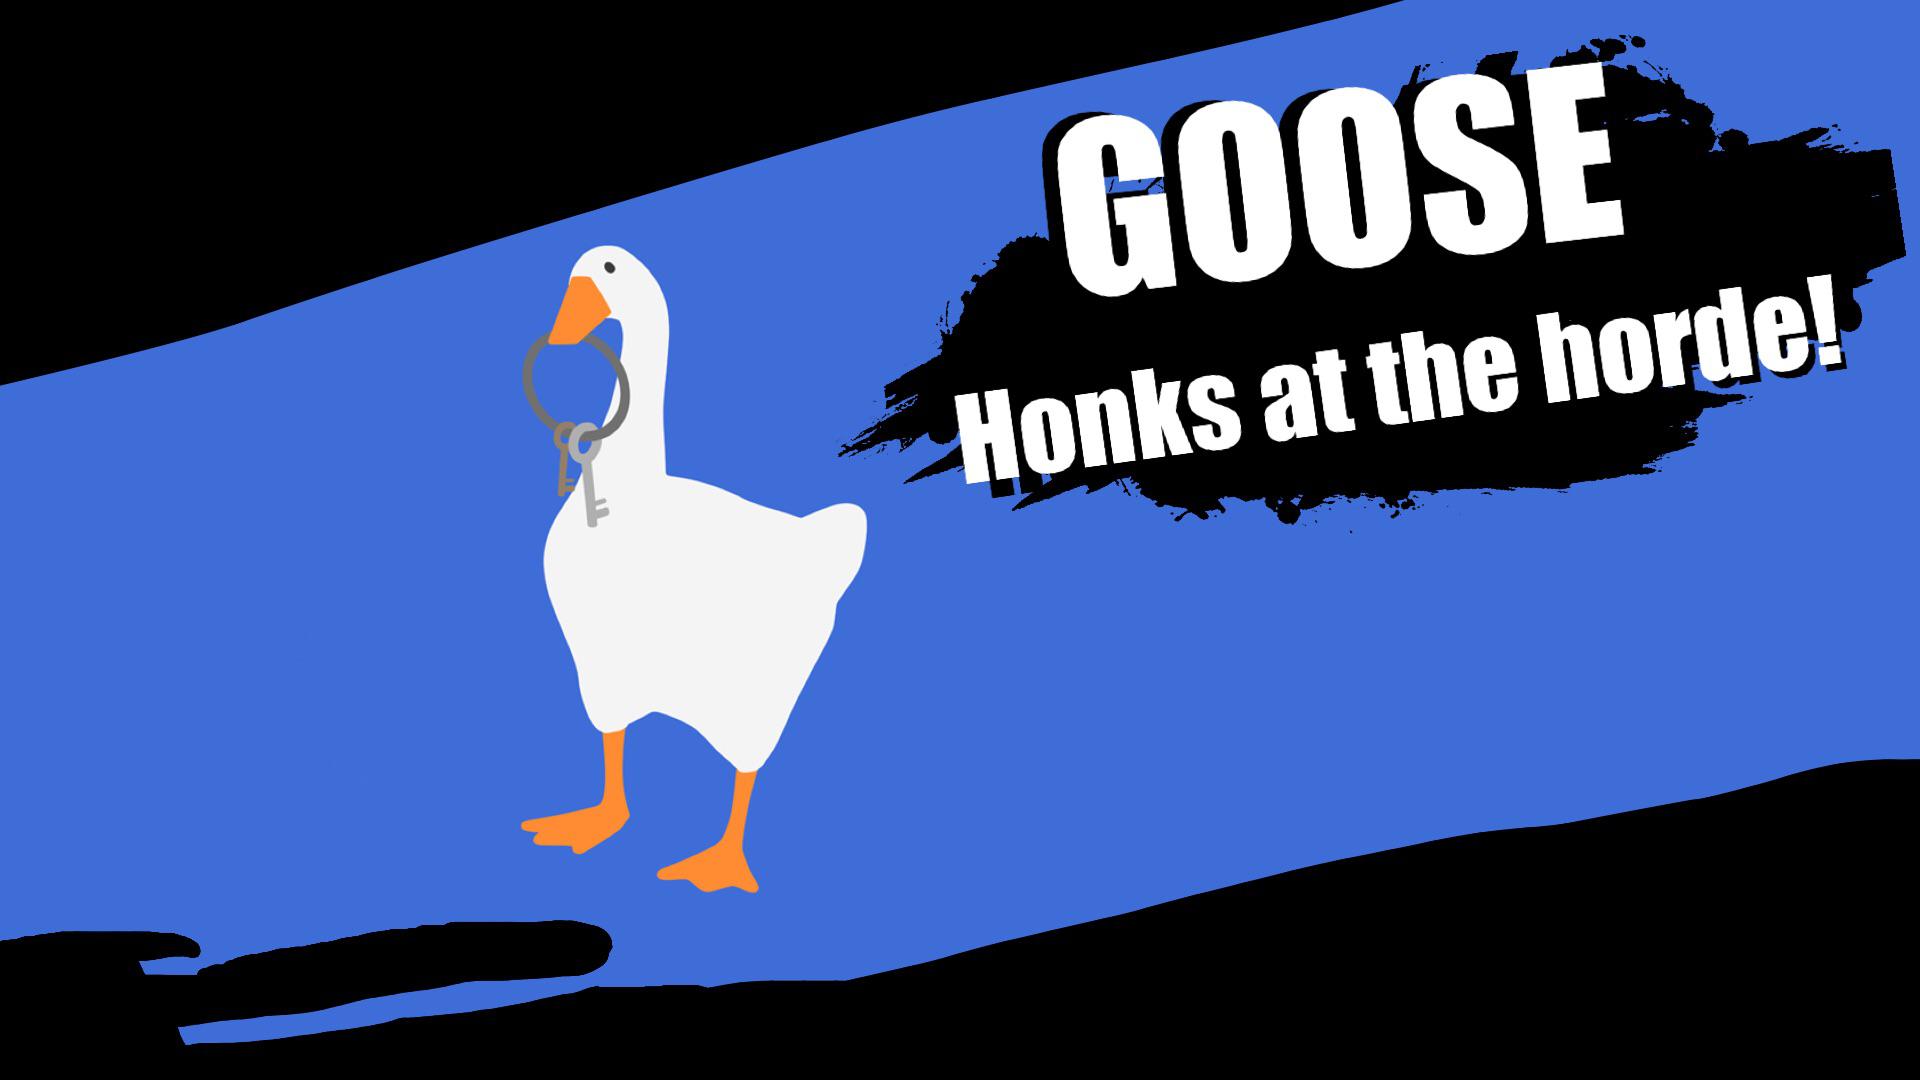 untitled goose game wallpaper